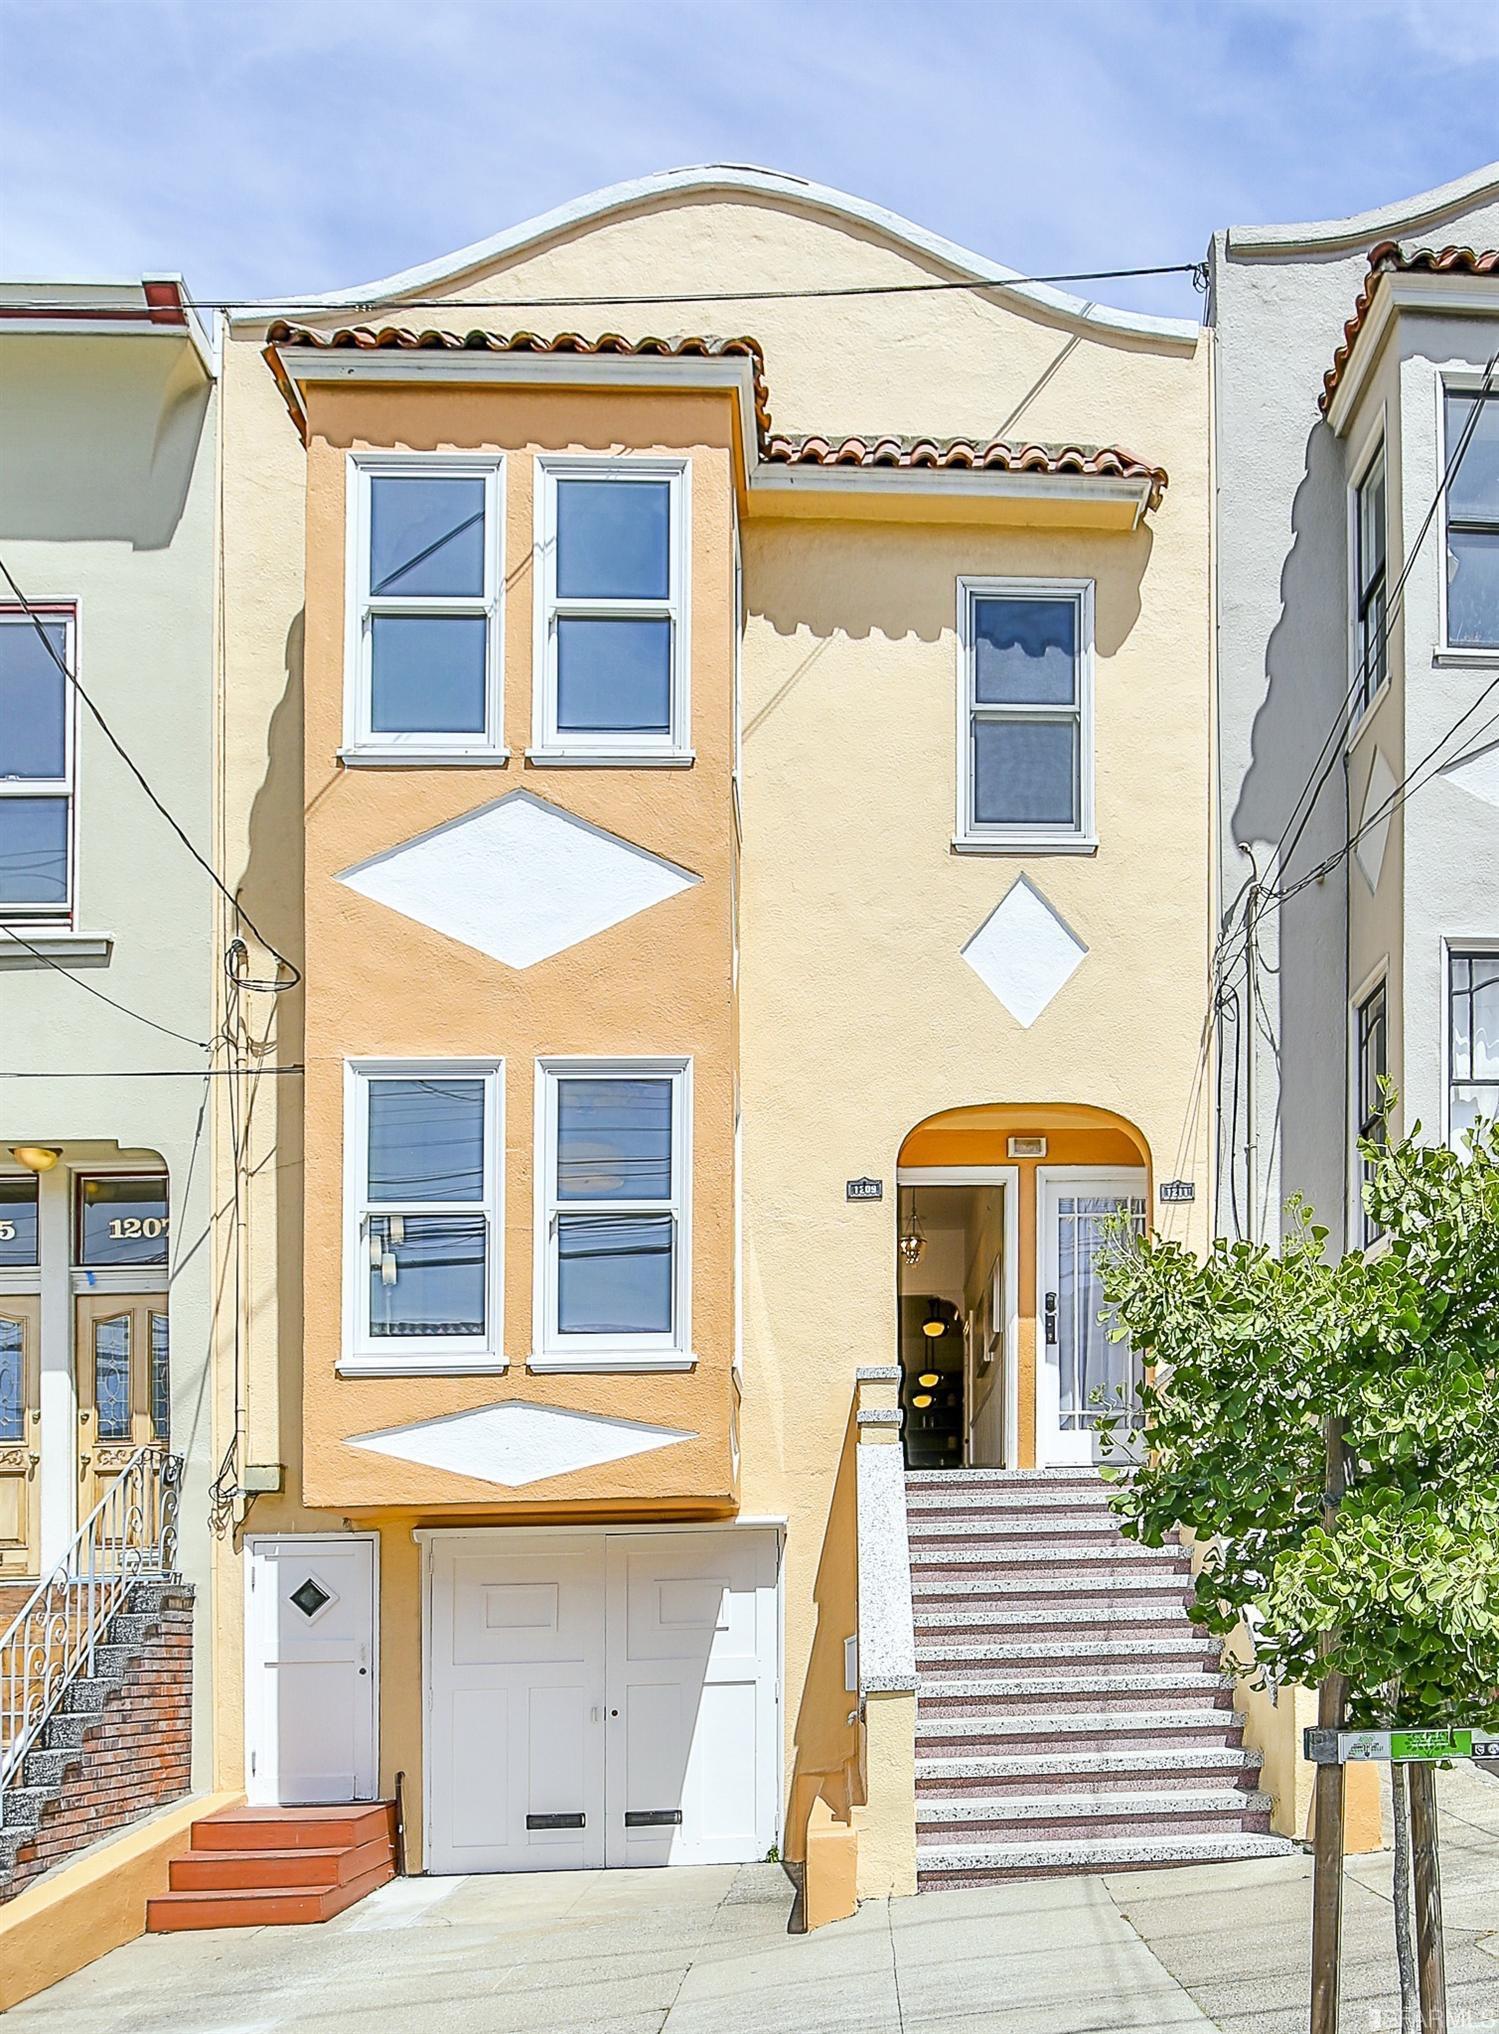 1209 Sanchez Street, San Francisco, listed at $1,095,000